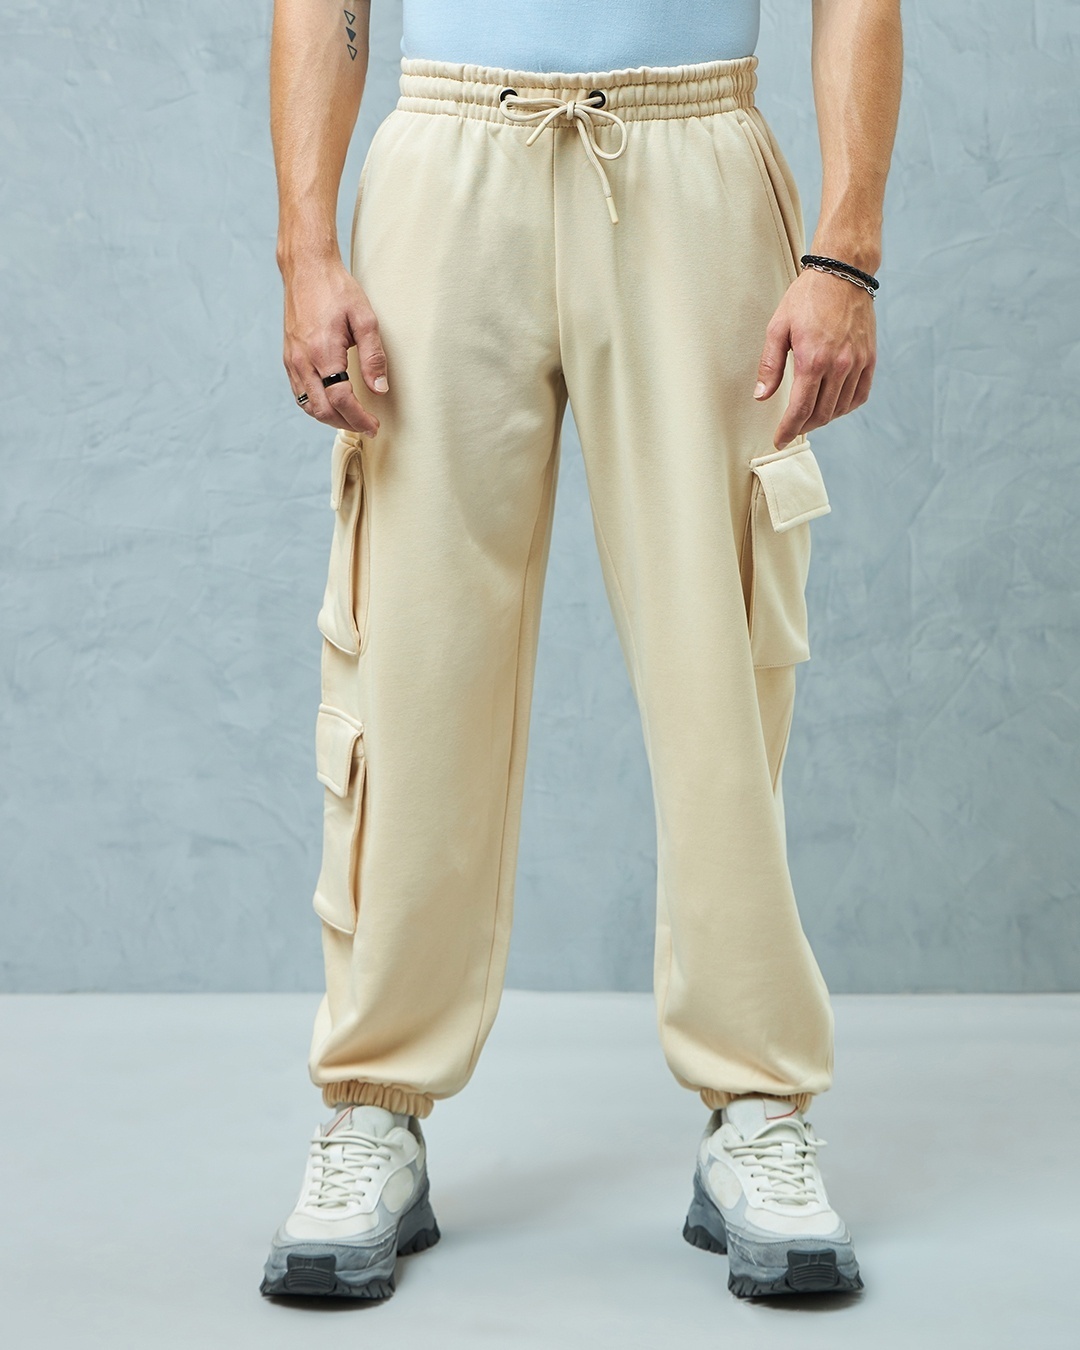 Buy MONTREZ Men Comfort Loose Fit Cotton Cargos Trousers Brown at Amazon.in